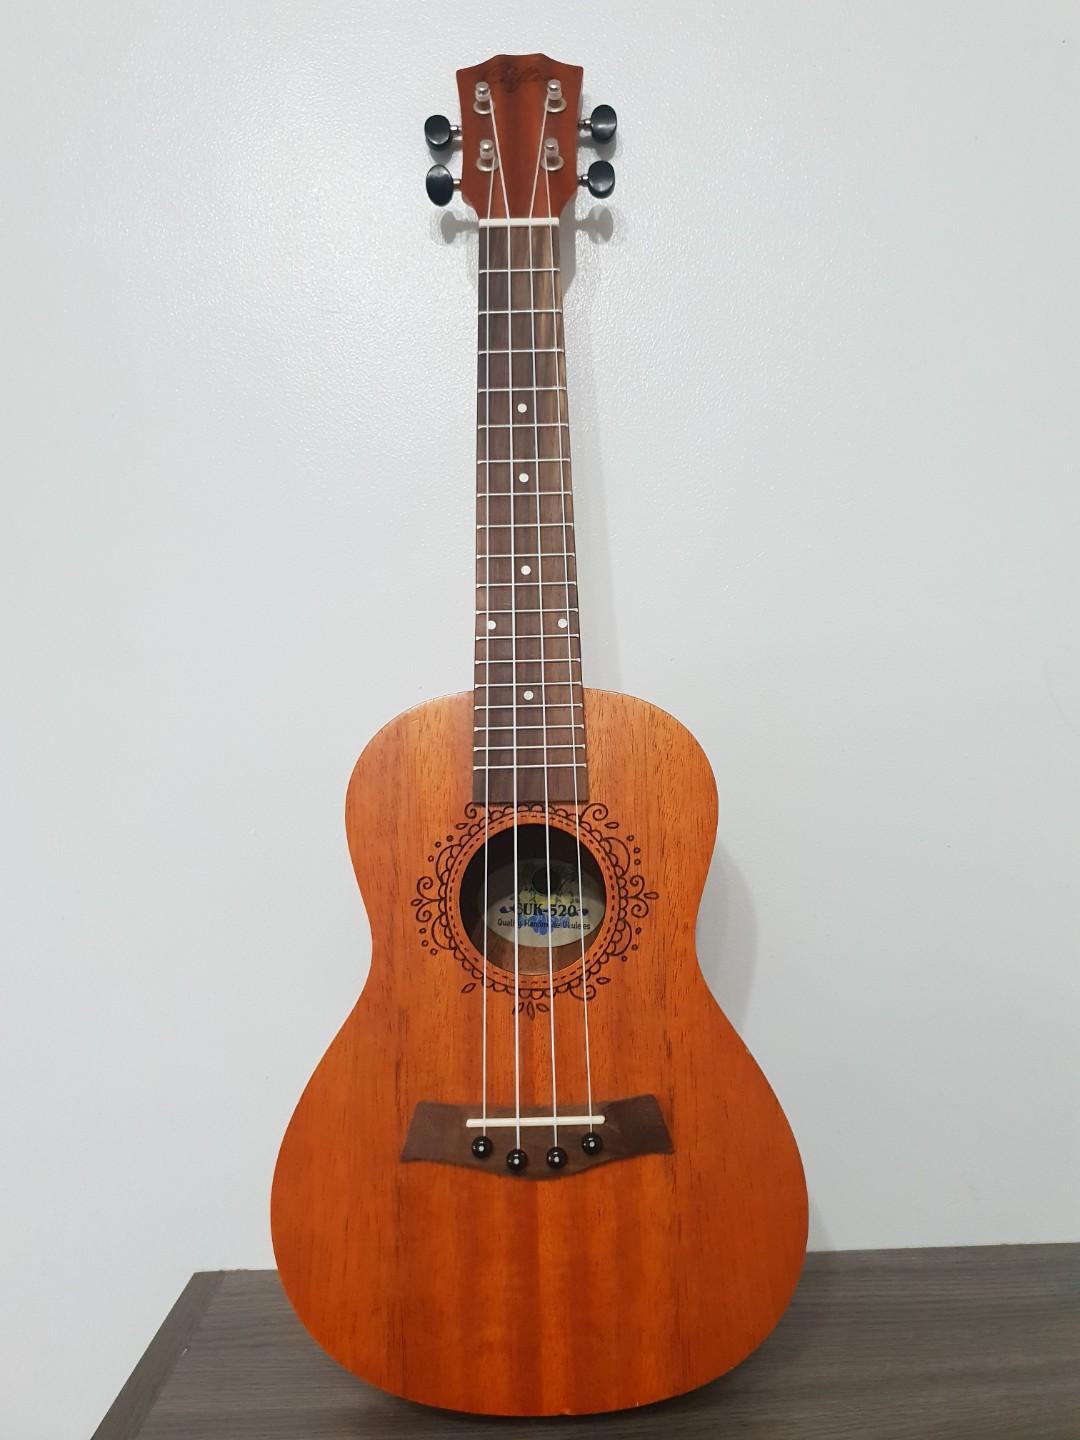 clifton cuk520 concert mahogany ukulele 1562382368 fab56bc8 progressive